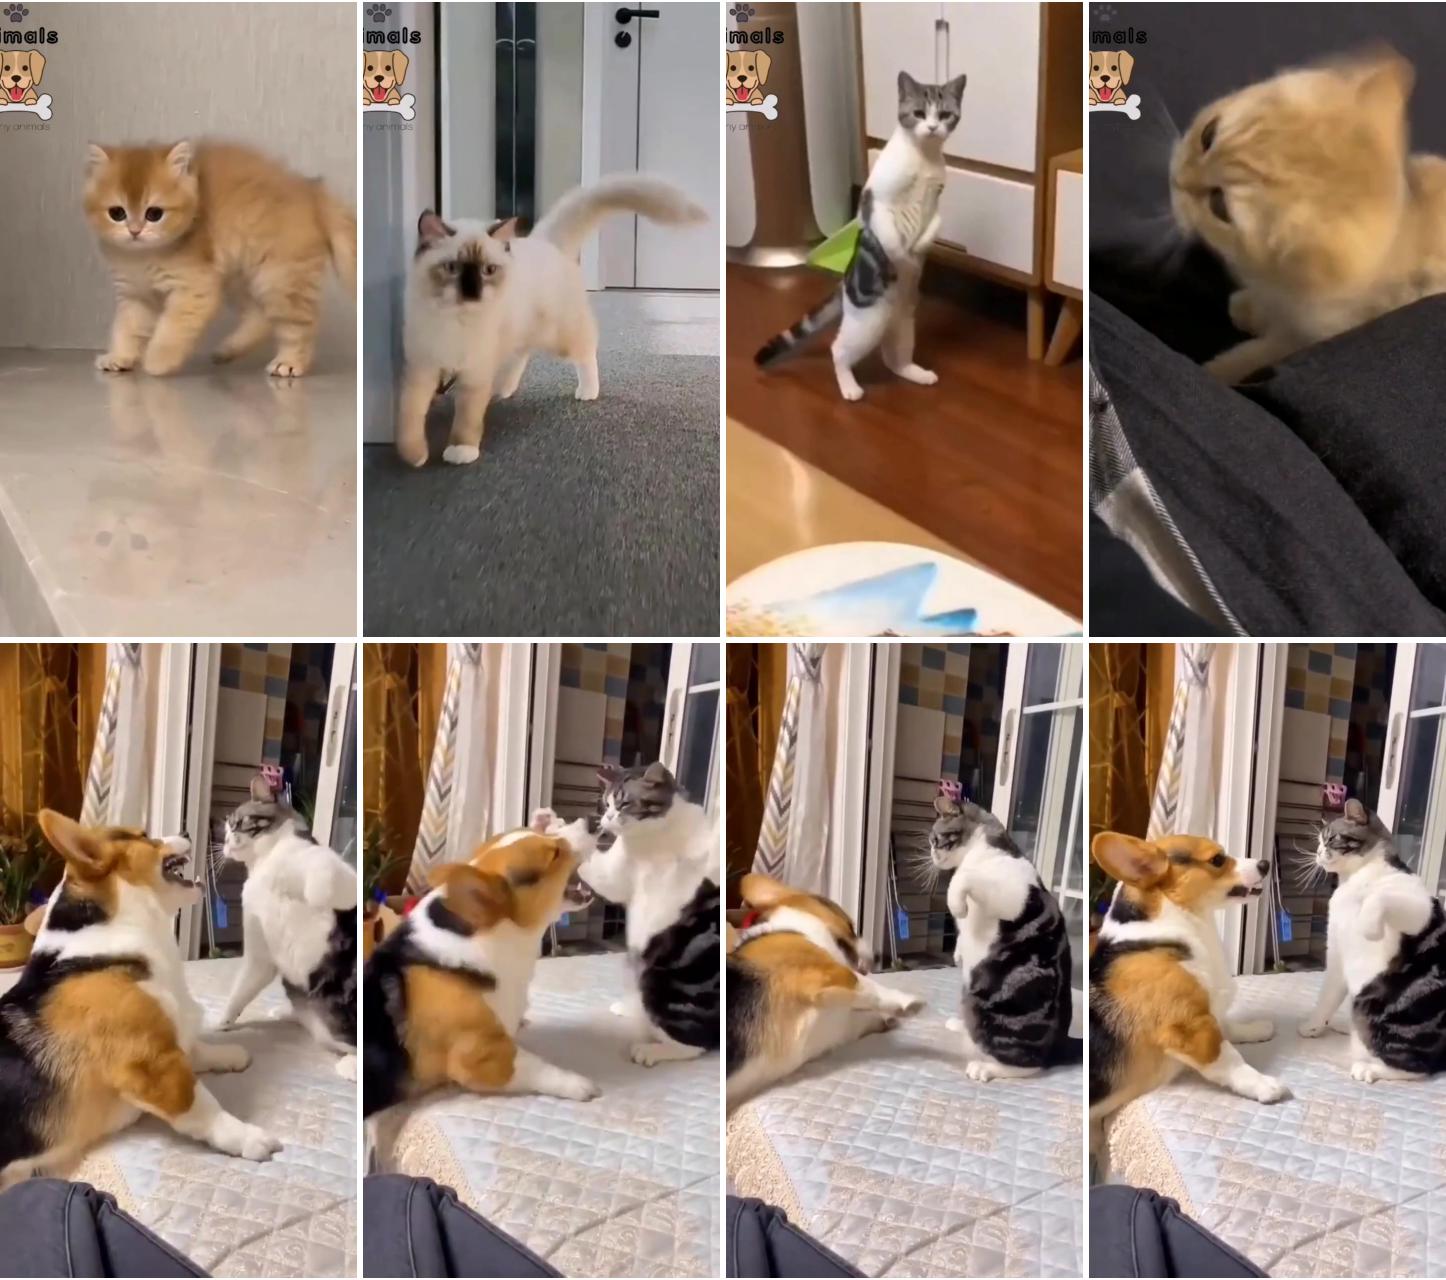 Funny fight dog vs cat; cute little kittens